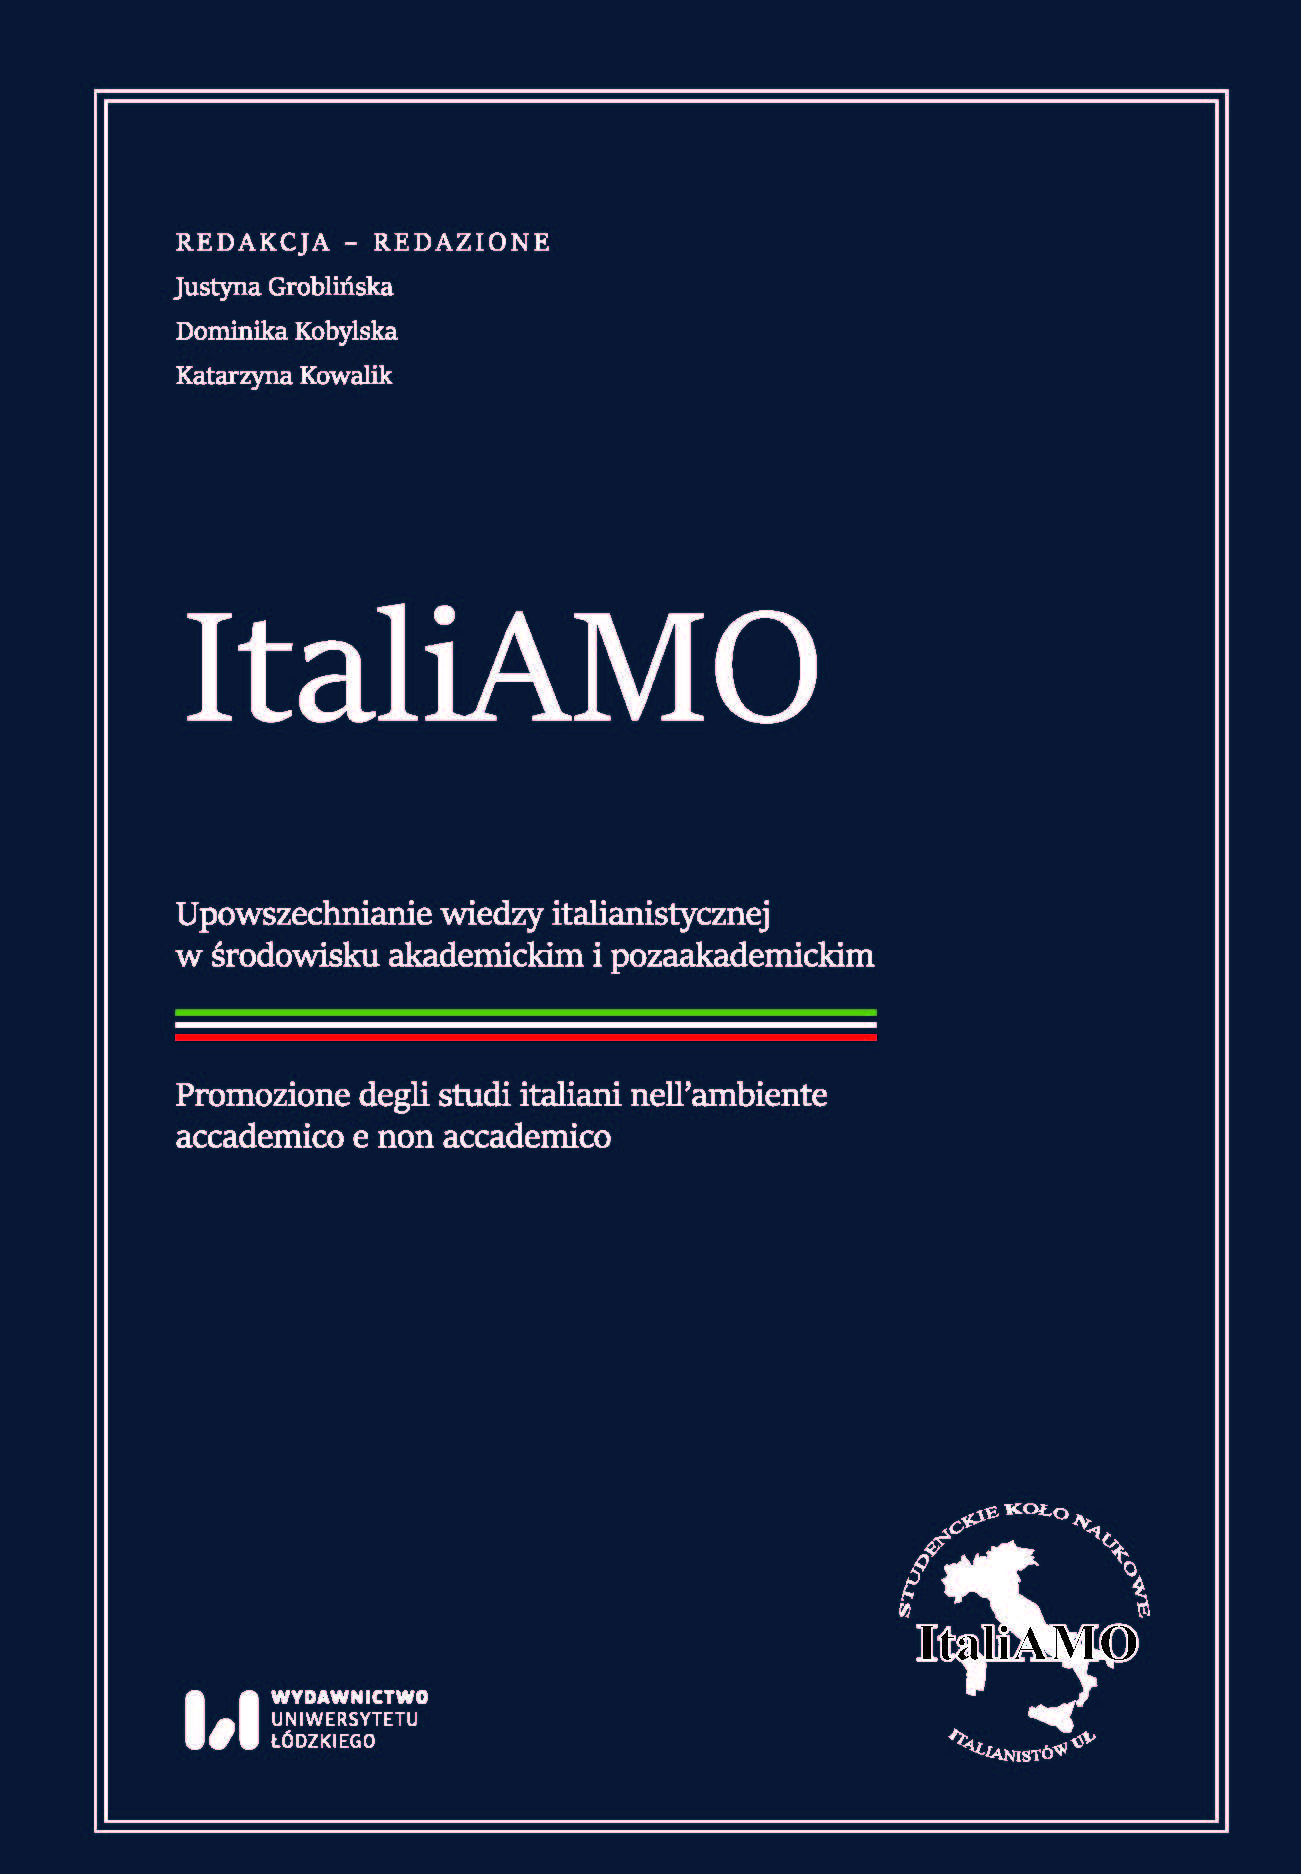 ItaliAMO. Promotion of Italian Studies in the Academic and Non-Academic Environment